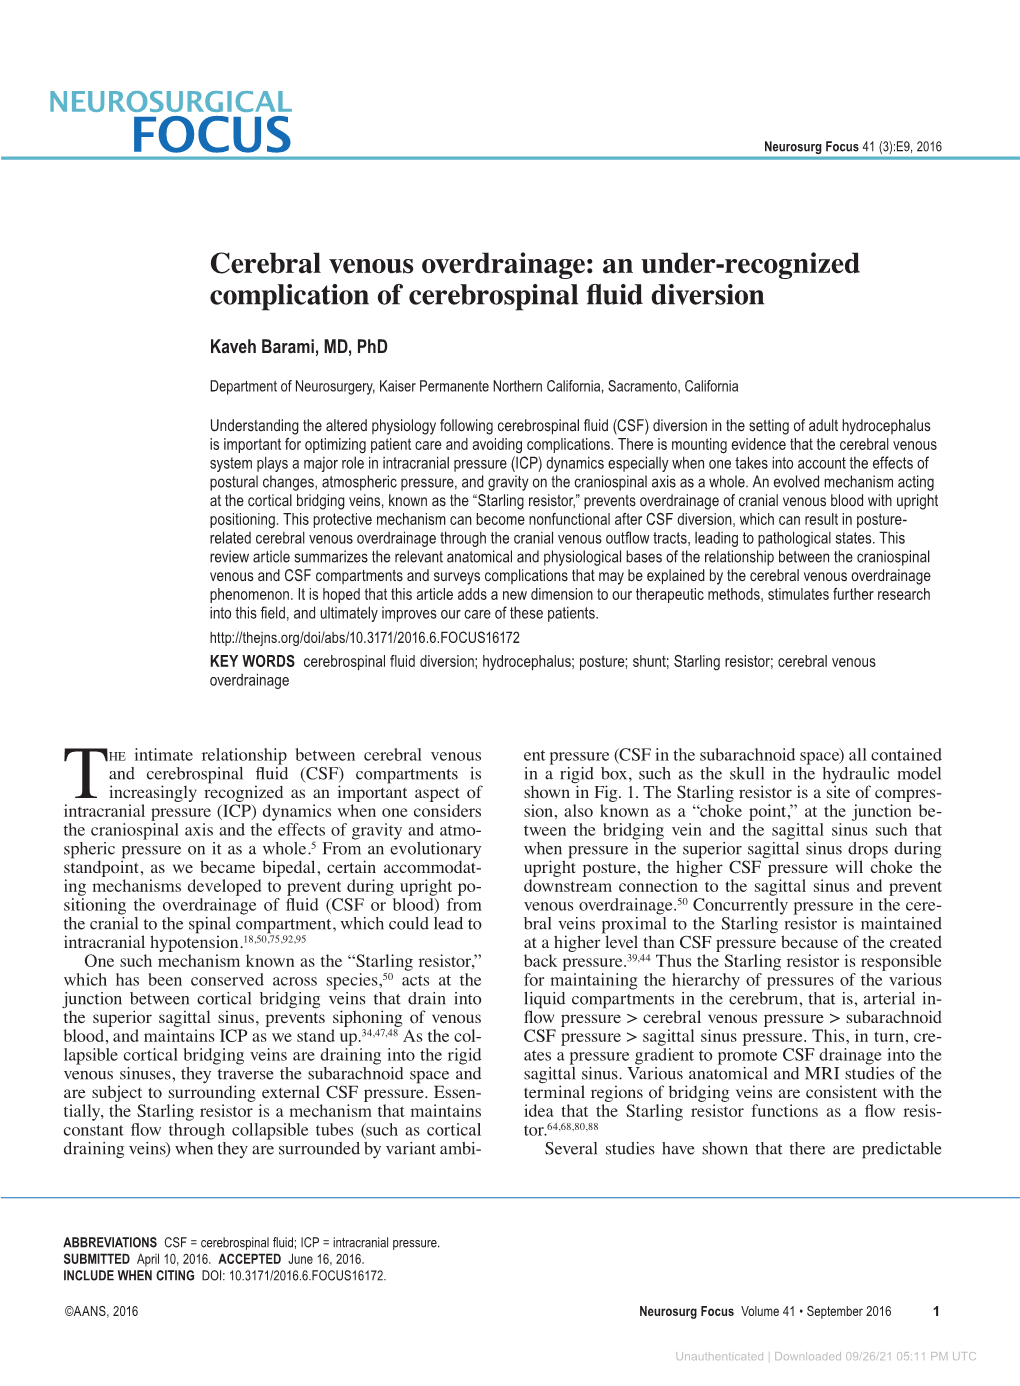 Cerebral Venous Overdrainage: an Under-Recognized Complication of Cerebrospinal Fluid Diversion